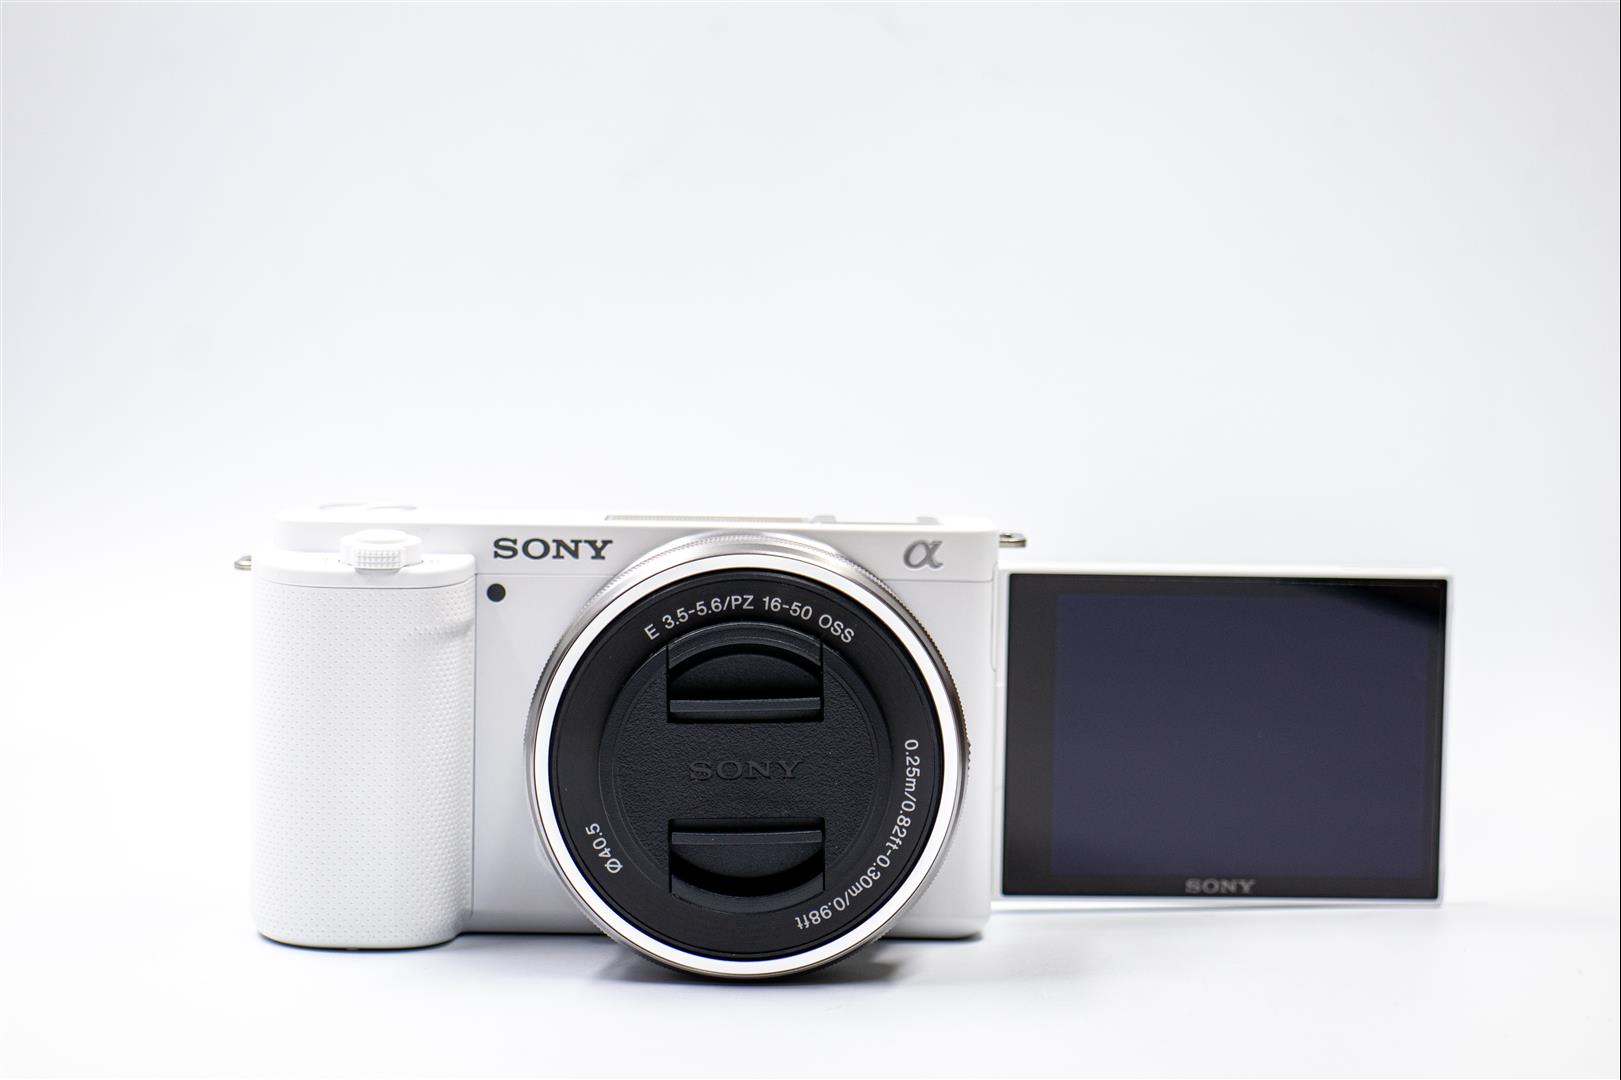 Sony ZV-E10 開箱